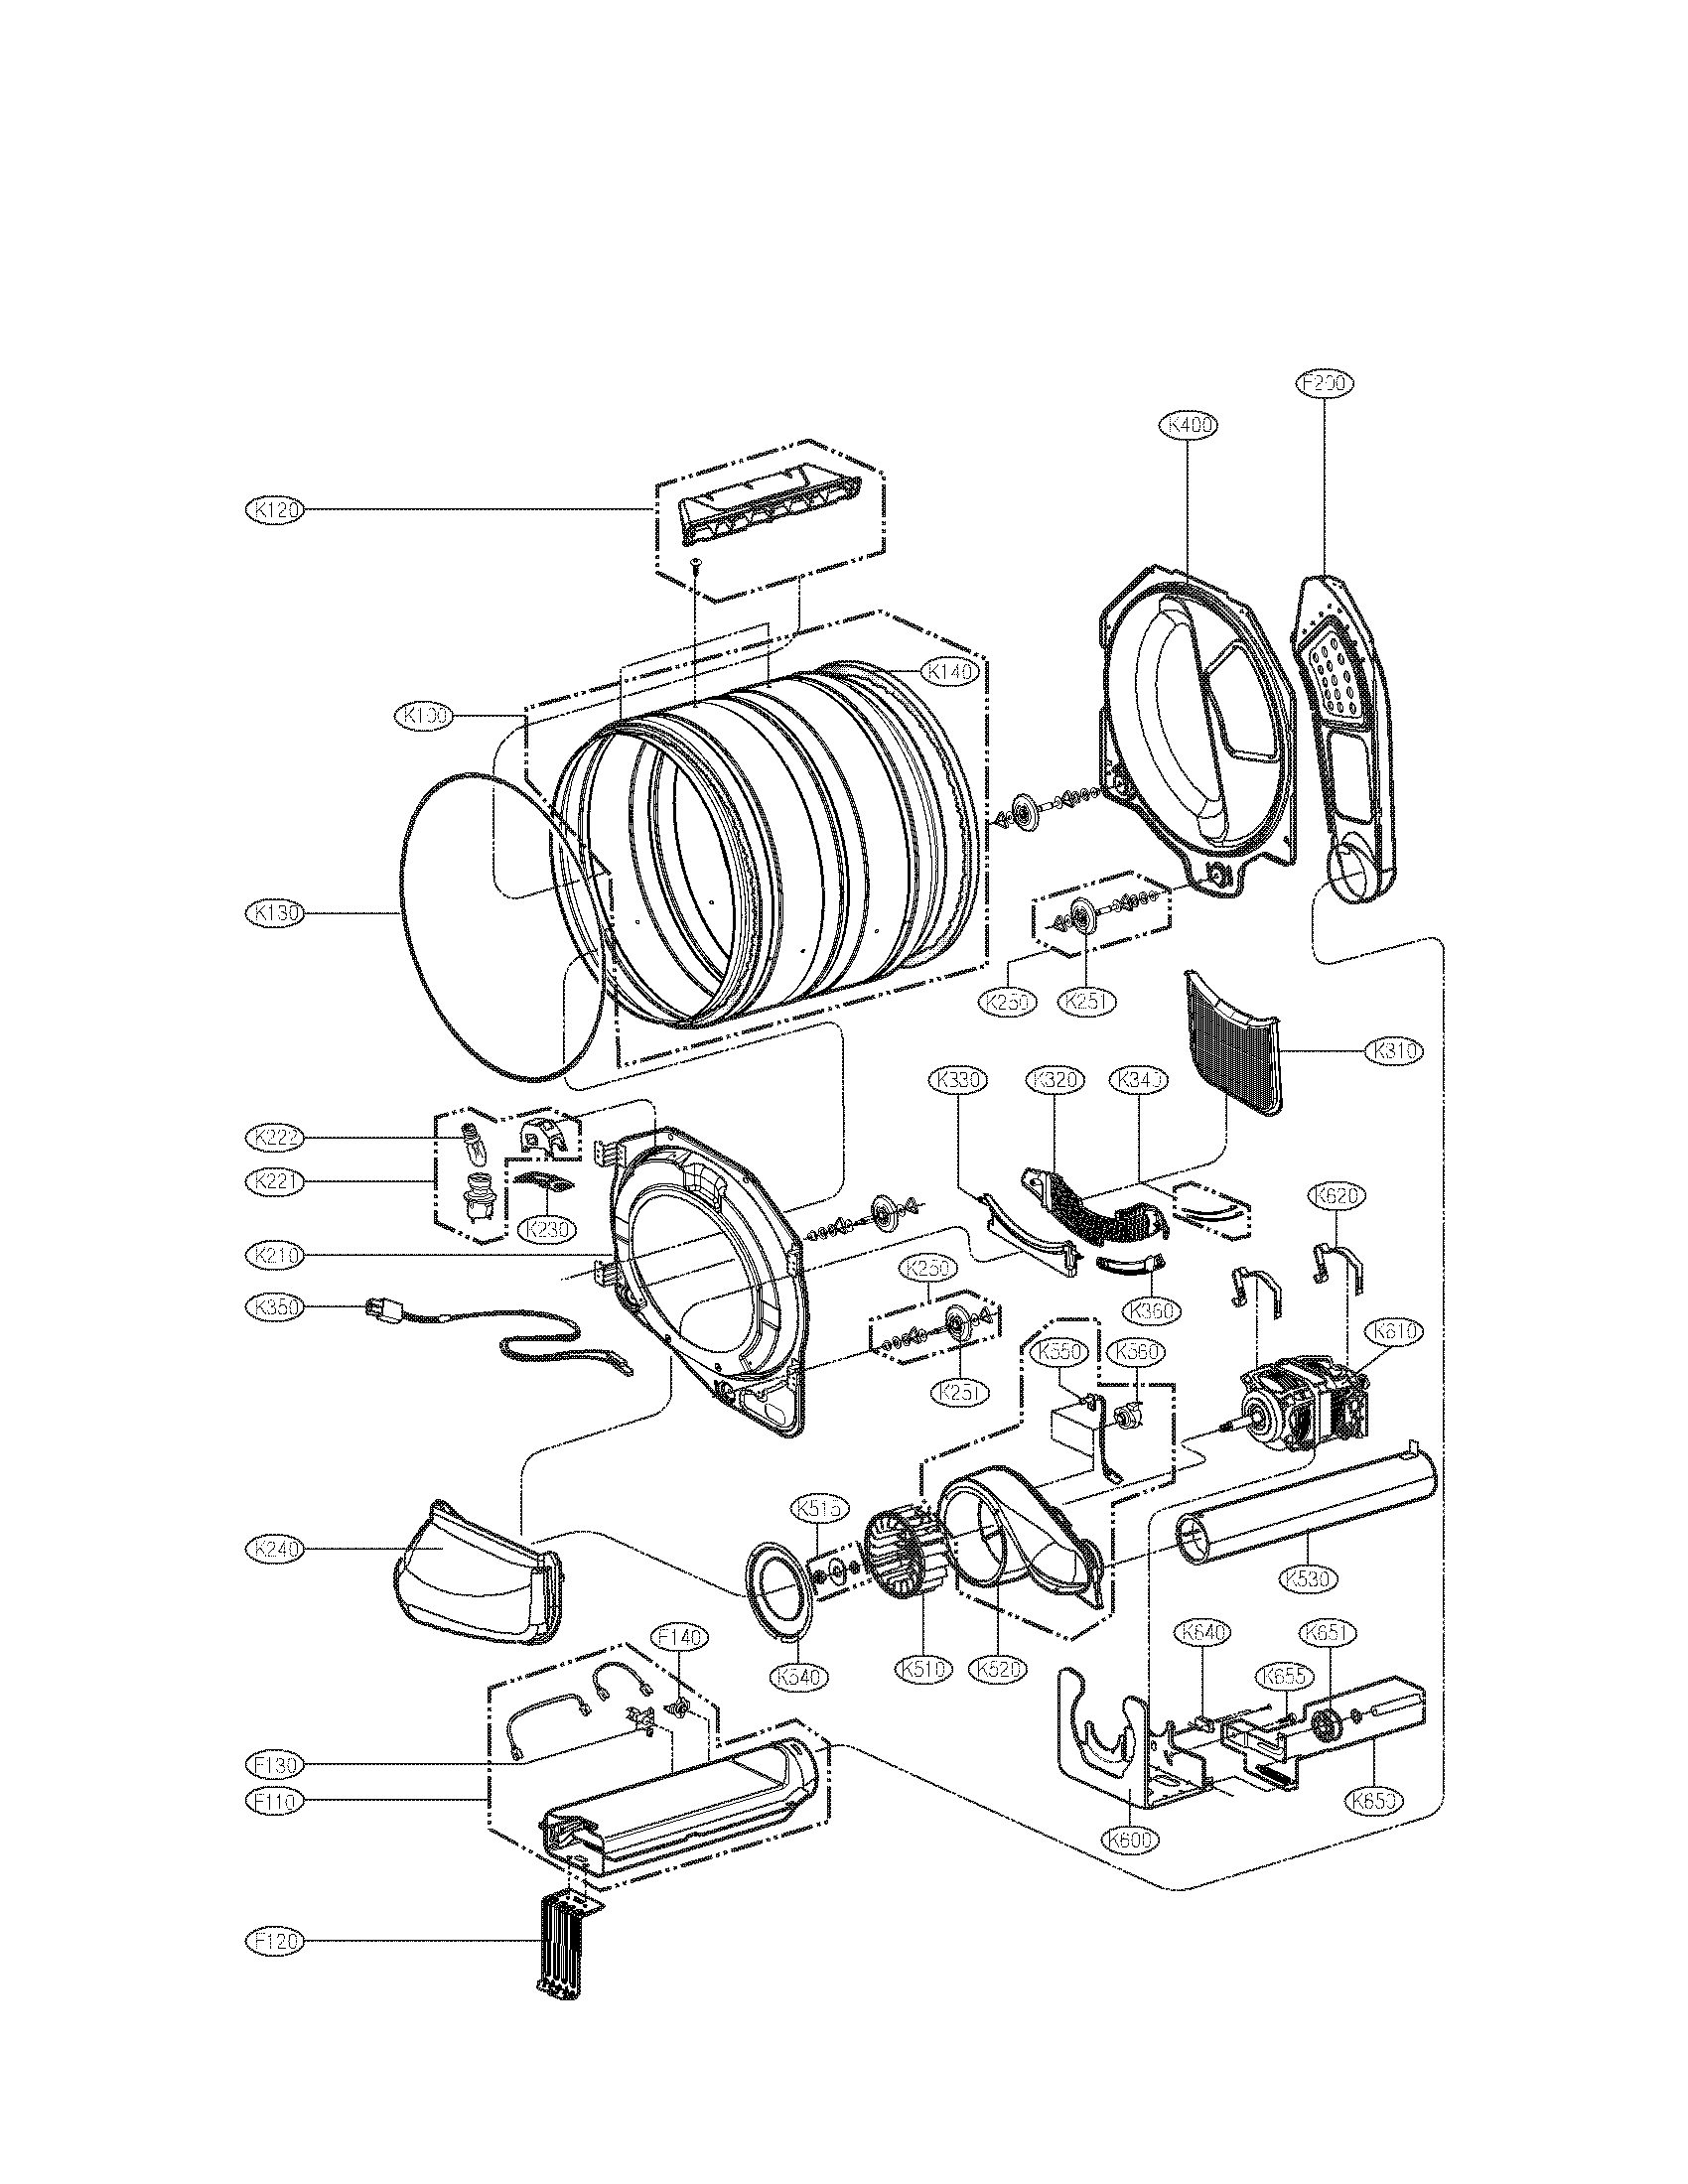 Lg Tromm Dryer Parts Manual